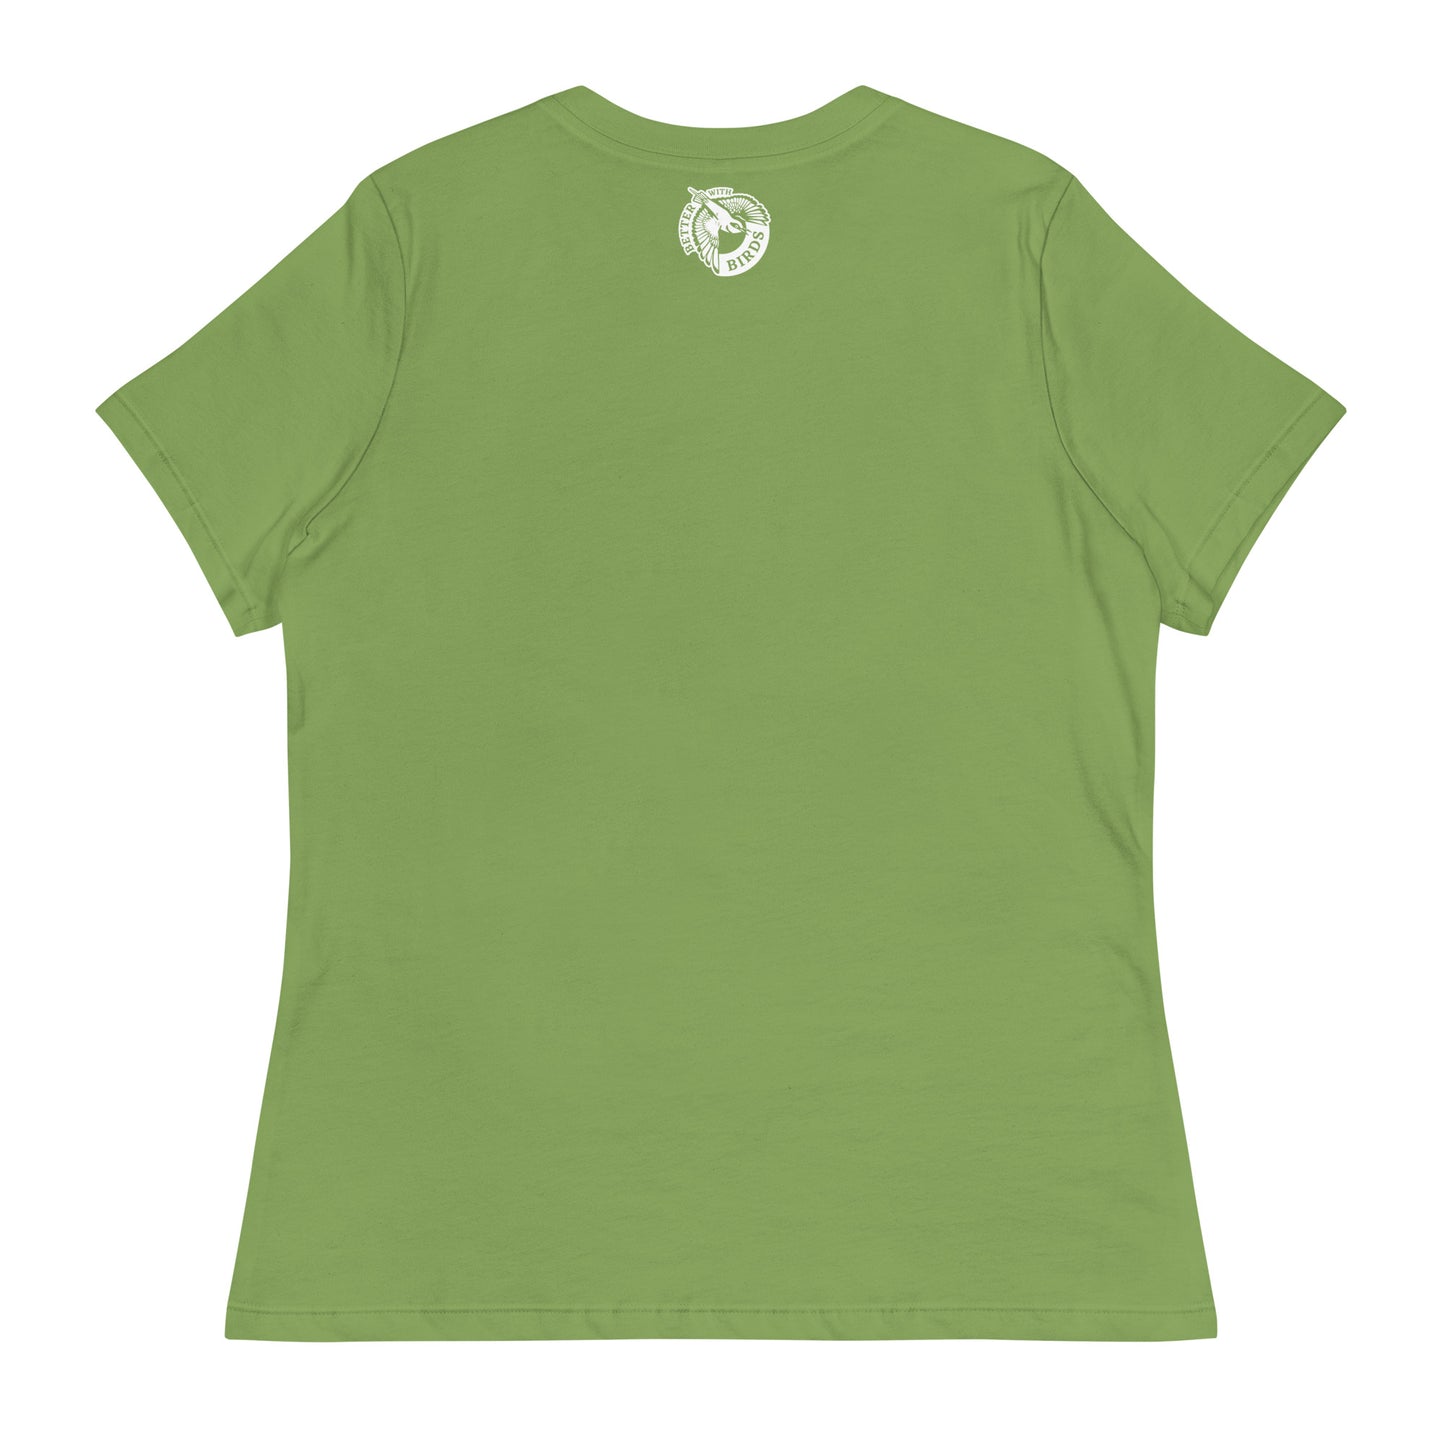 Great Gray Owl Women's Relaxed T-Shirt